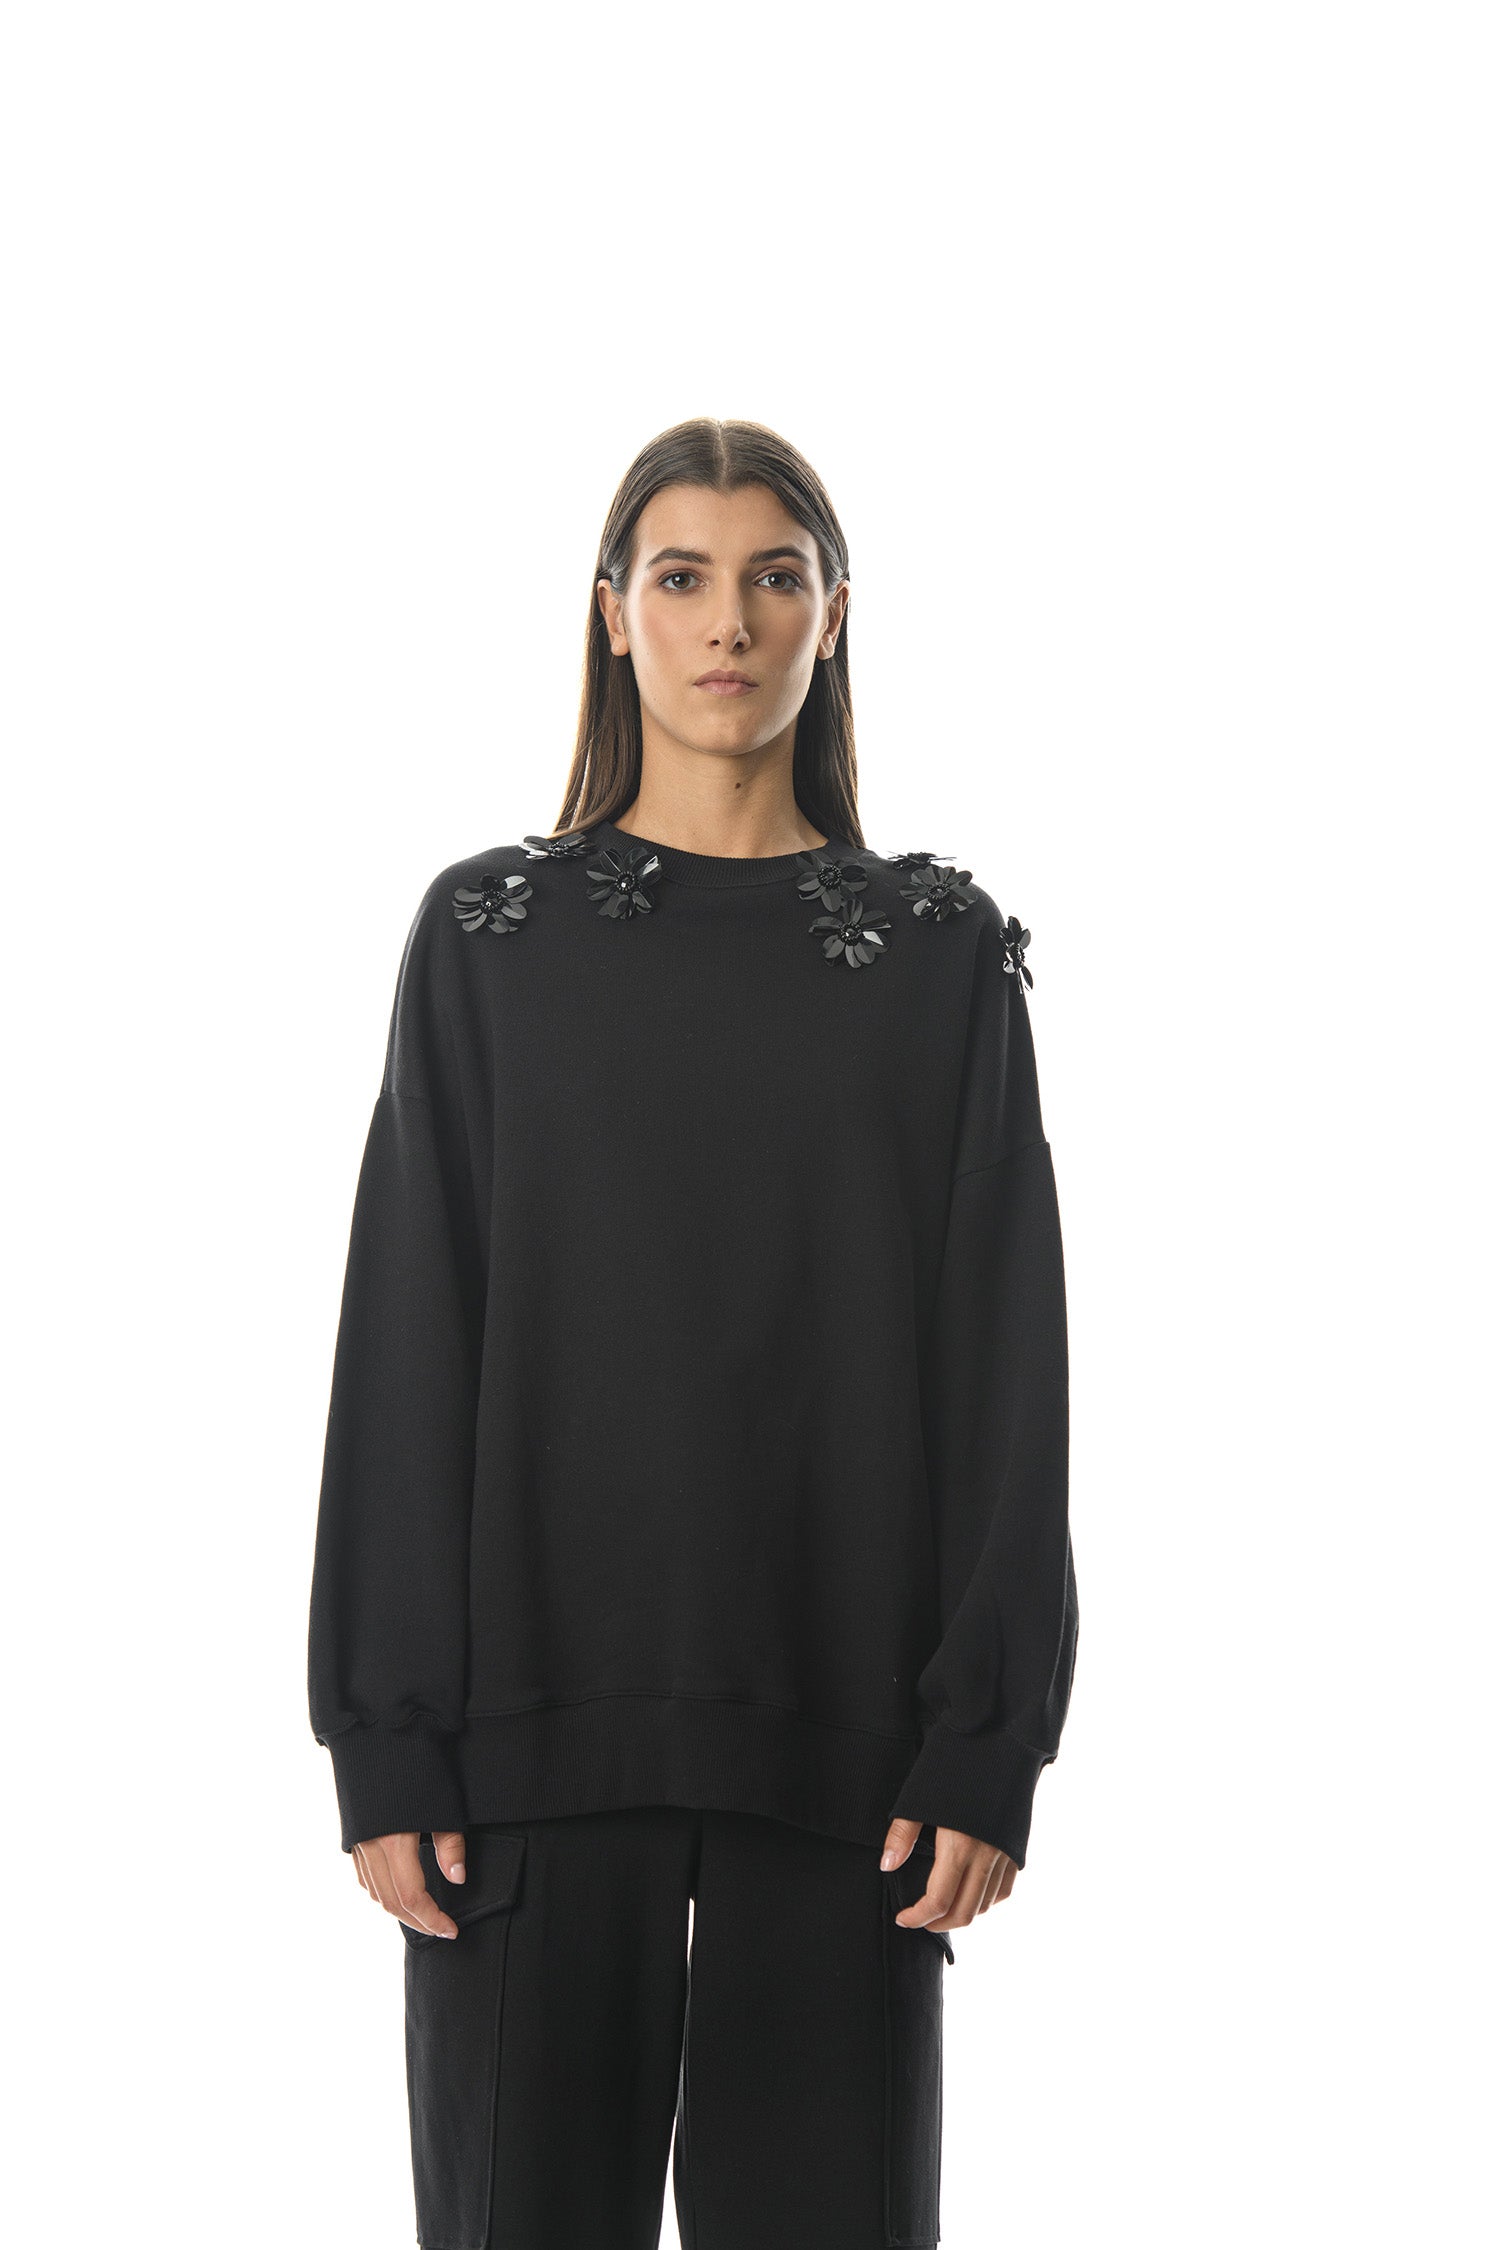 BELLATRIX Black sweatshirt with applications